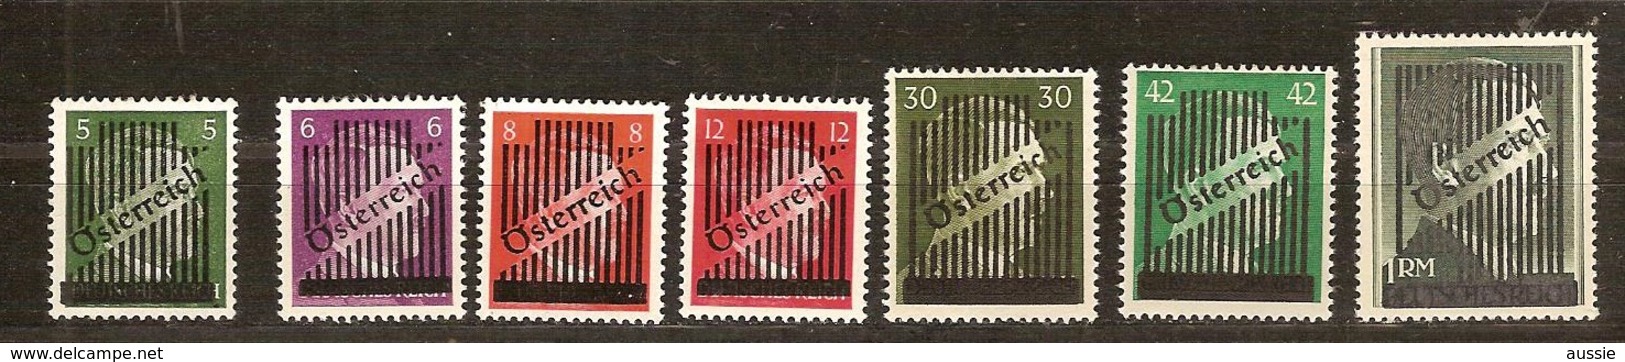 Autriche Oostenrijk 1945 Yvertn° 543-548 (*) MLH Cote 39 Euro Hitler Surchargés - Unused Stamps